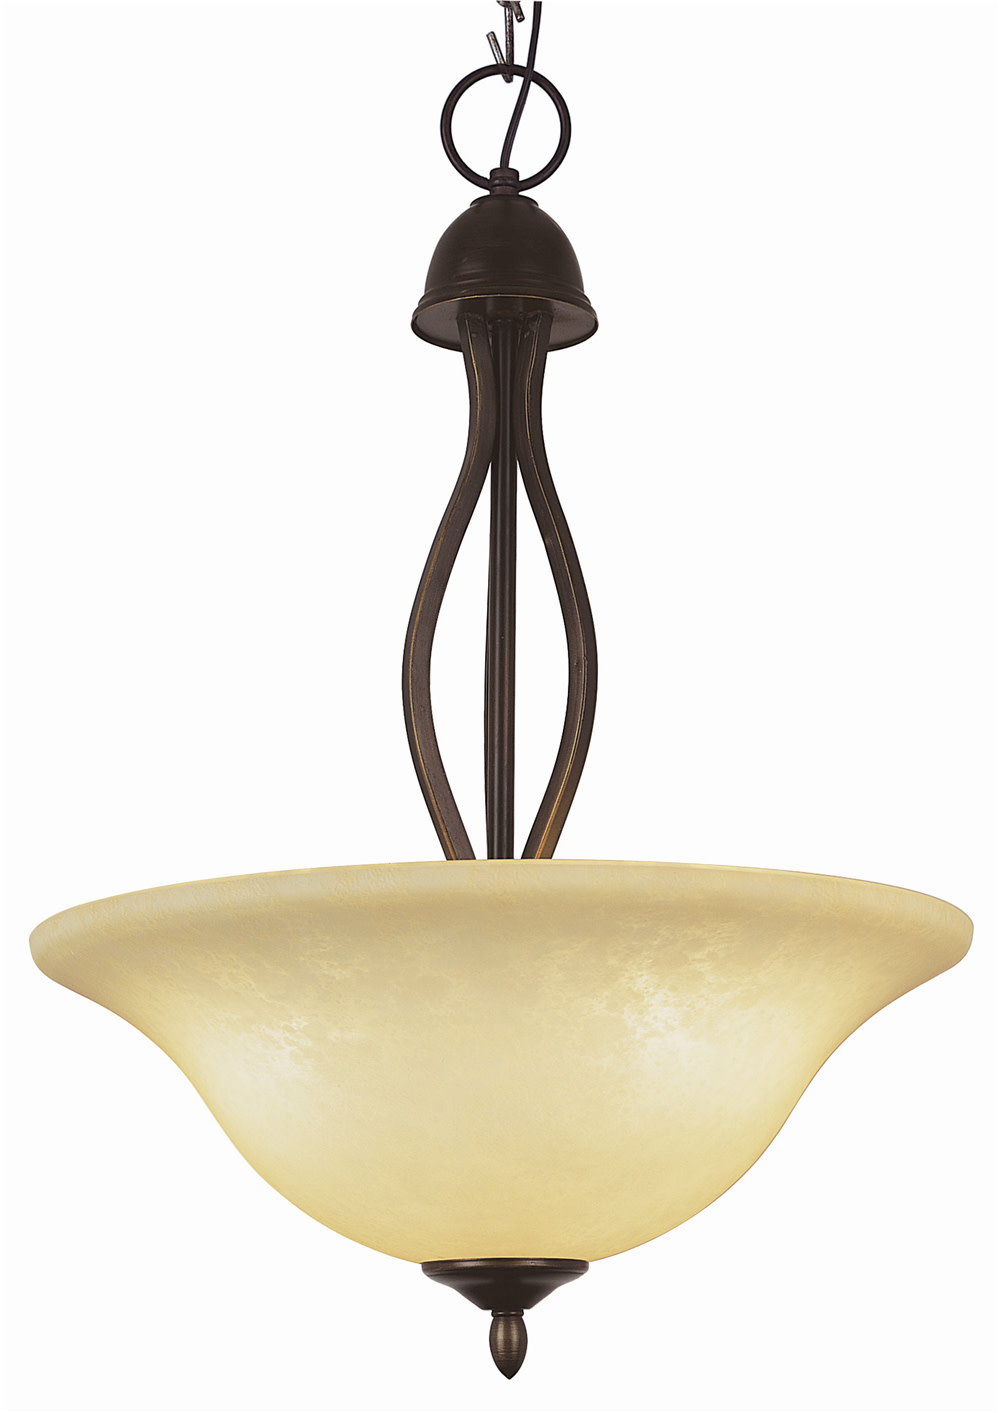 Trans Globe Lighting 8163 Glasswood 3 Light 16" Wide Pendant - Bronze - image 1 of 1